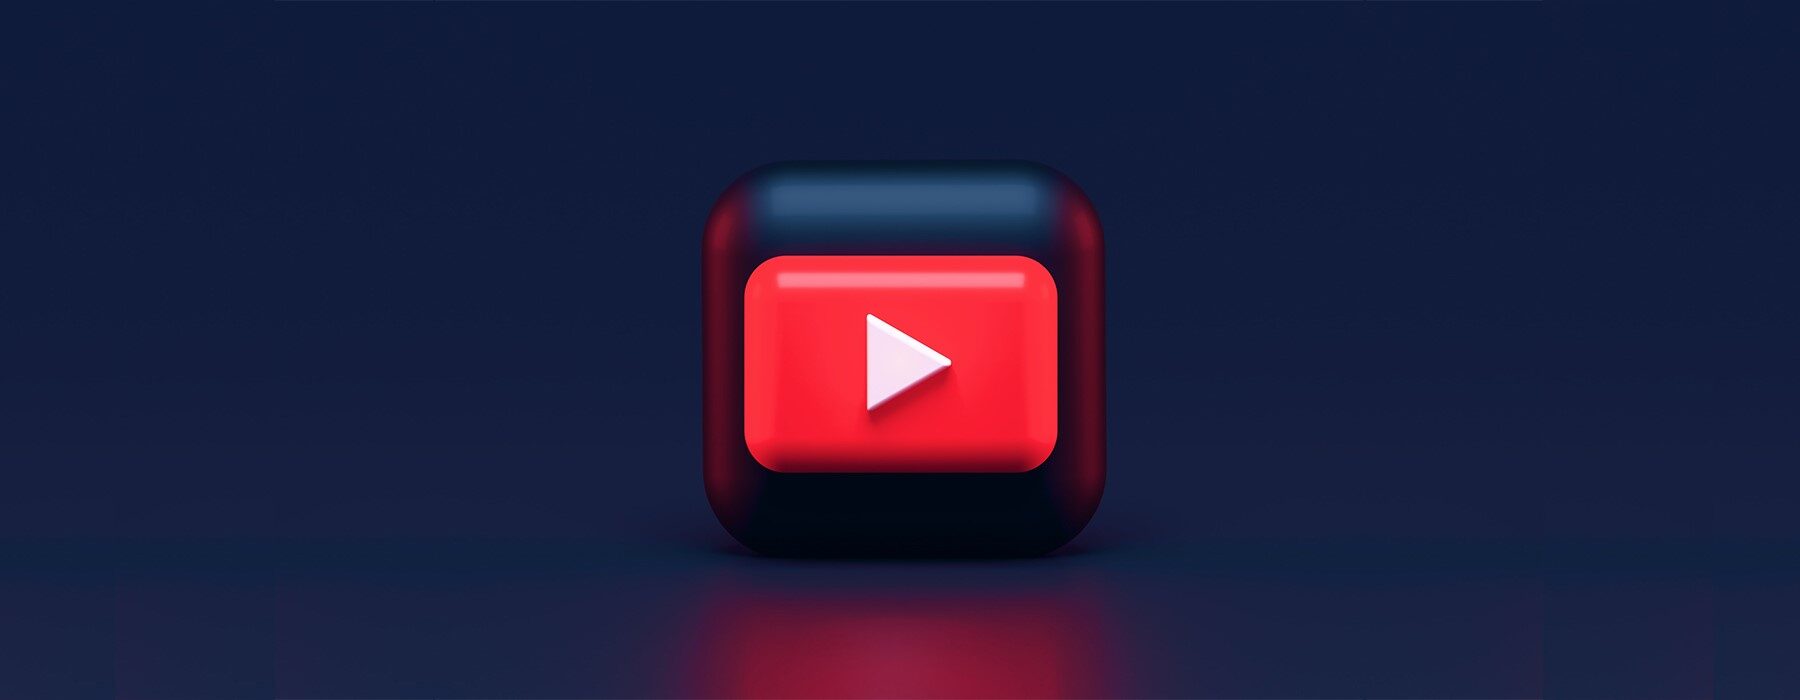 04 youtube ads